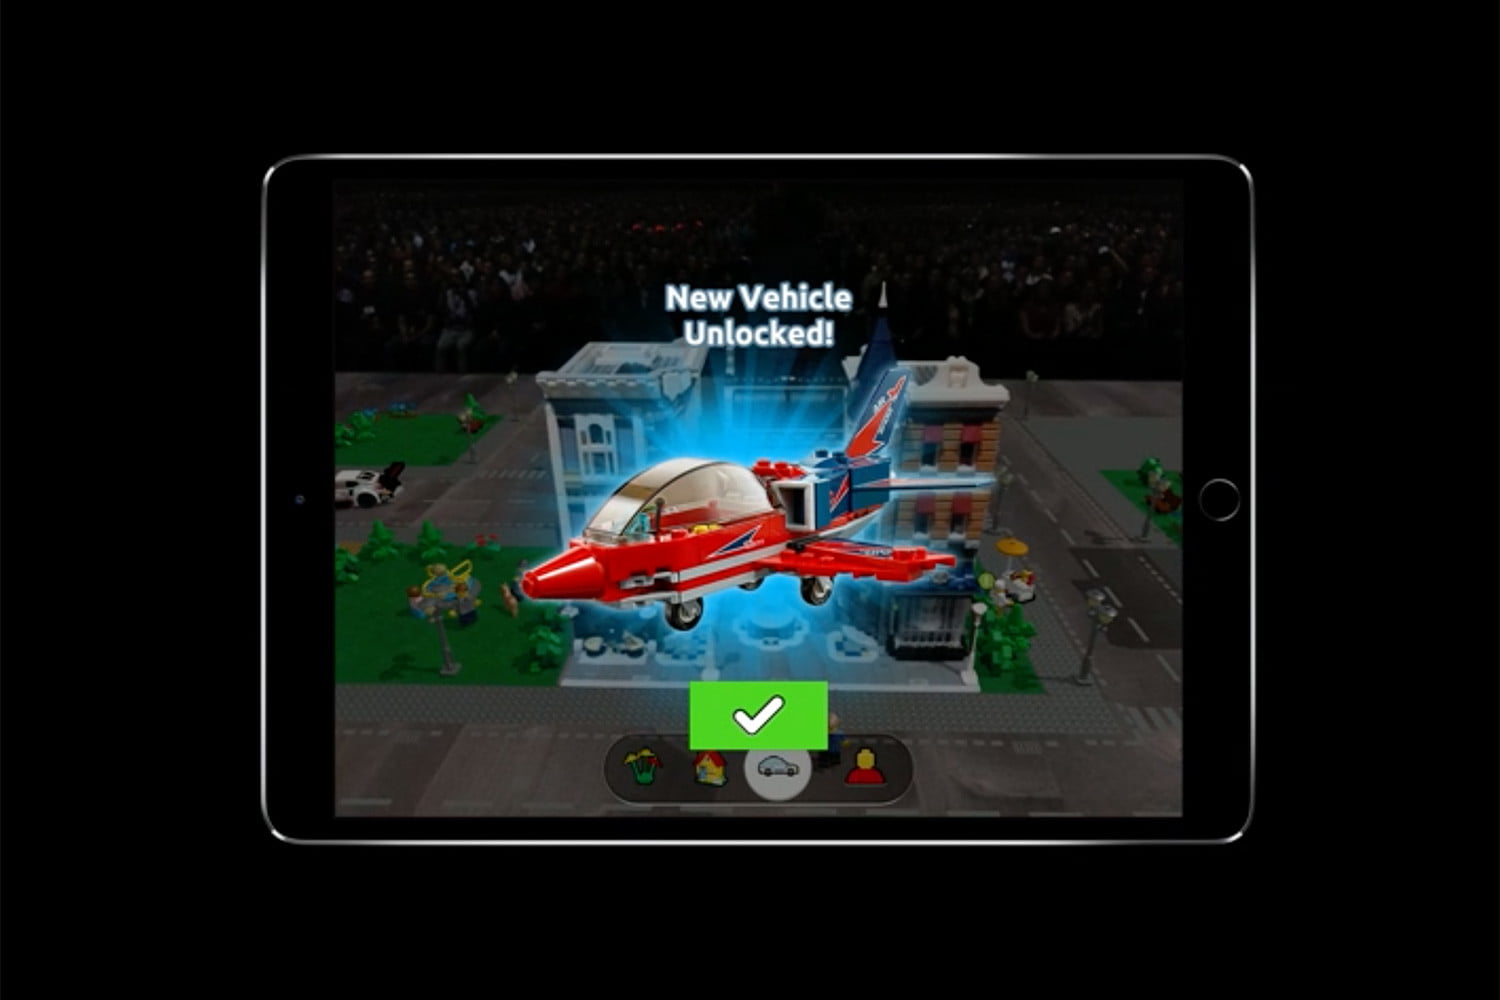 lego apple kit realidad aumentada wwdc 2018 new vehicle 1500x1000